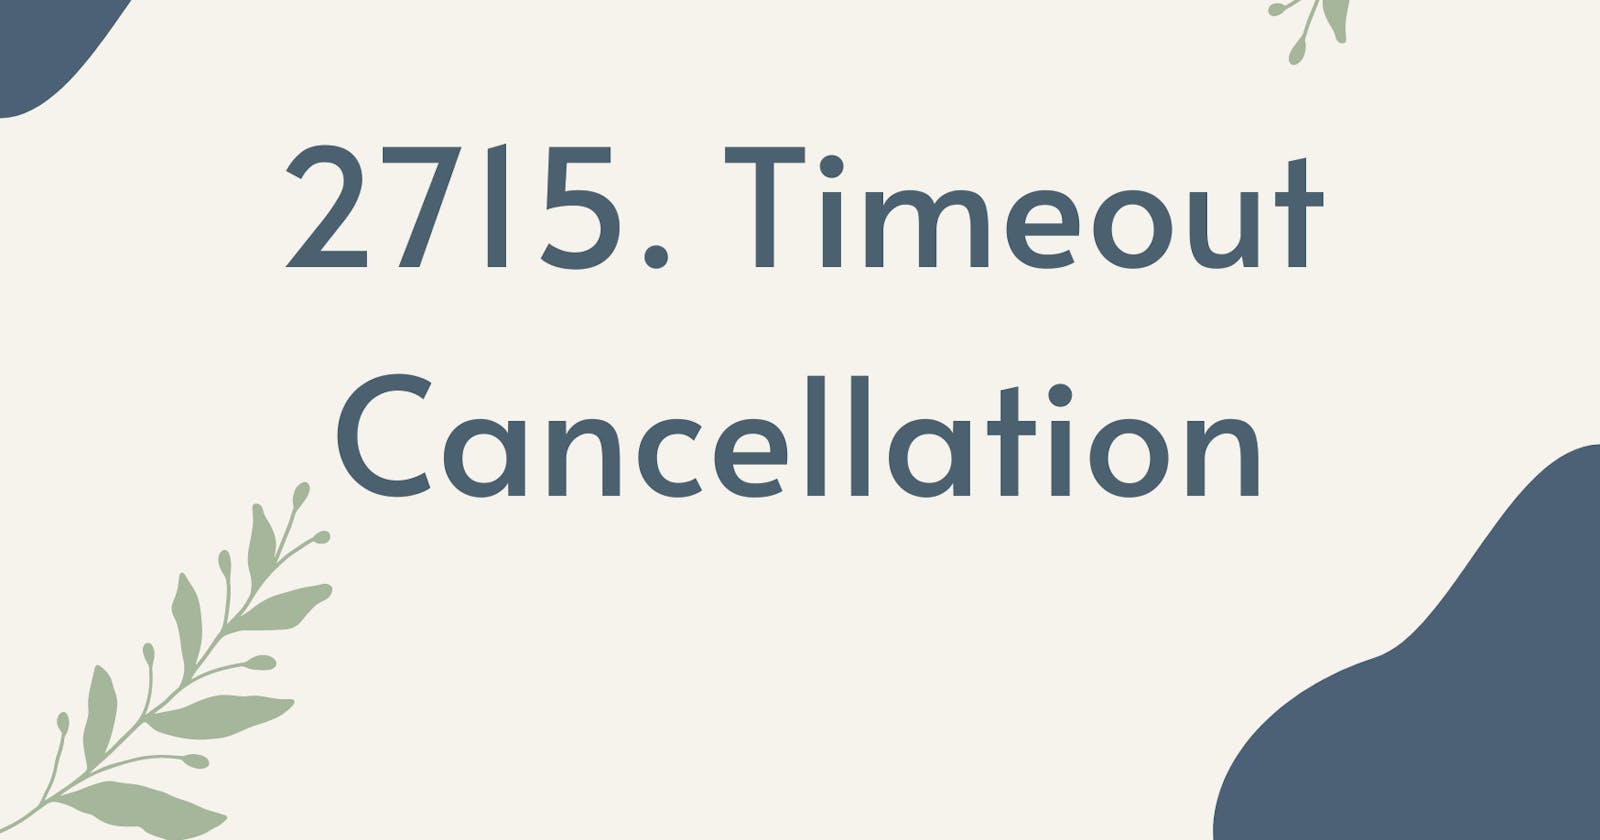 2715. Timeout Cancellation